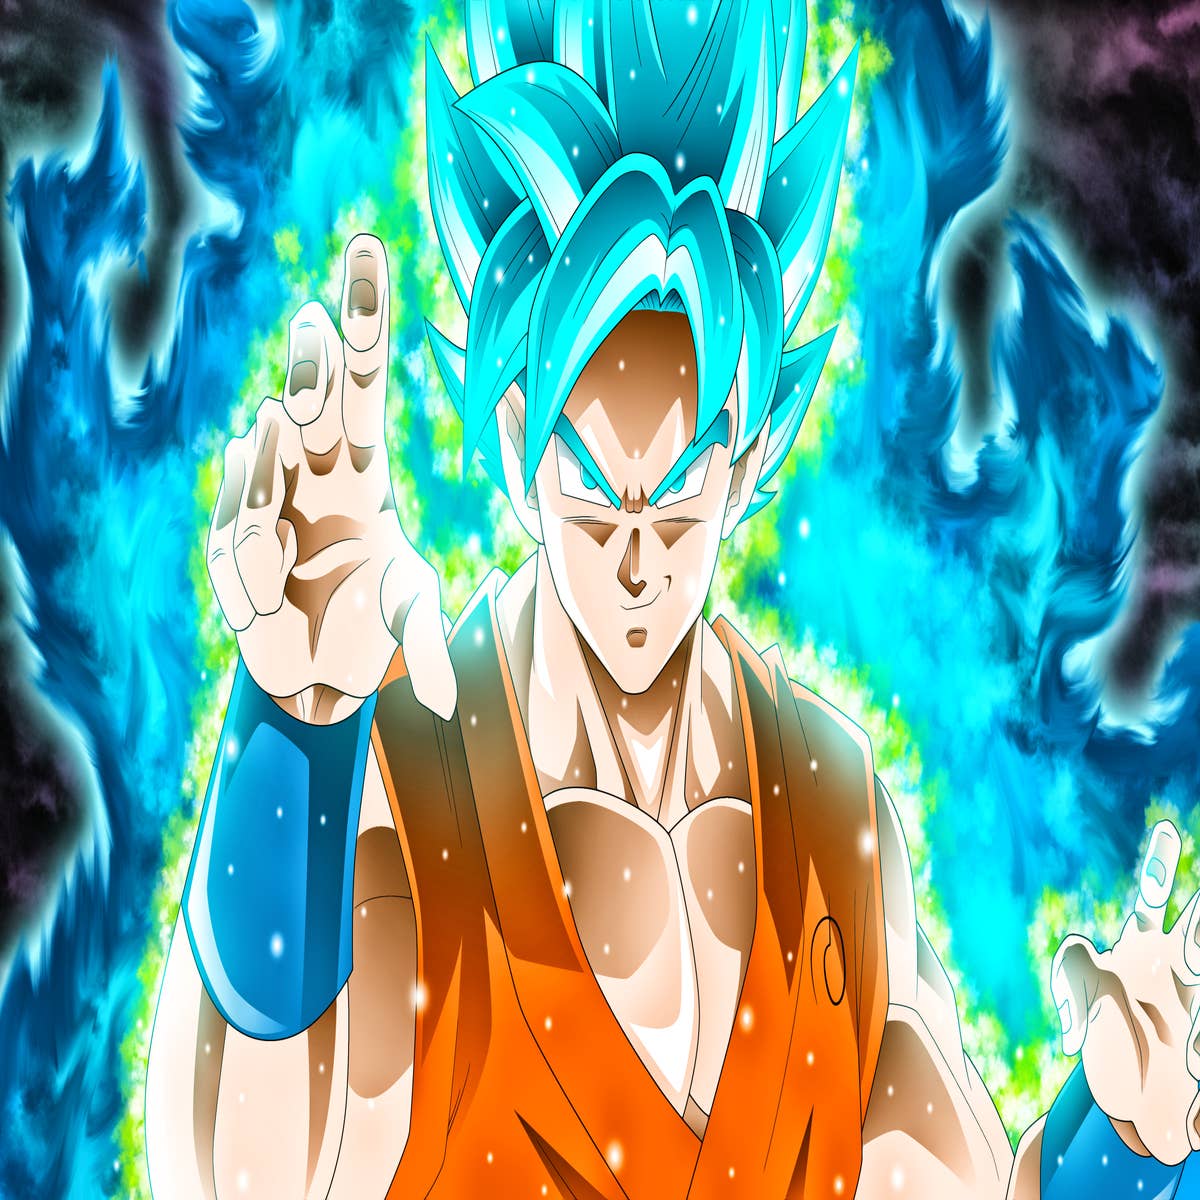 Dragon Ball Super  Goku voltará a usar forma de Super Saiyajin